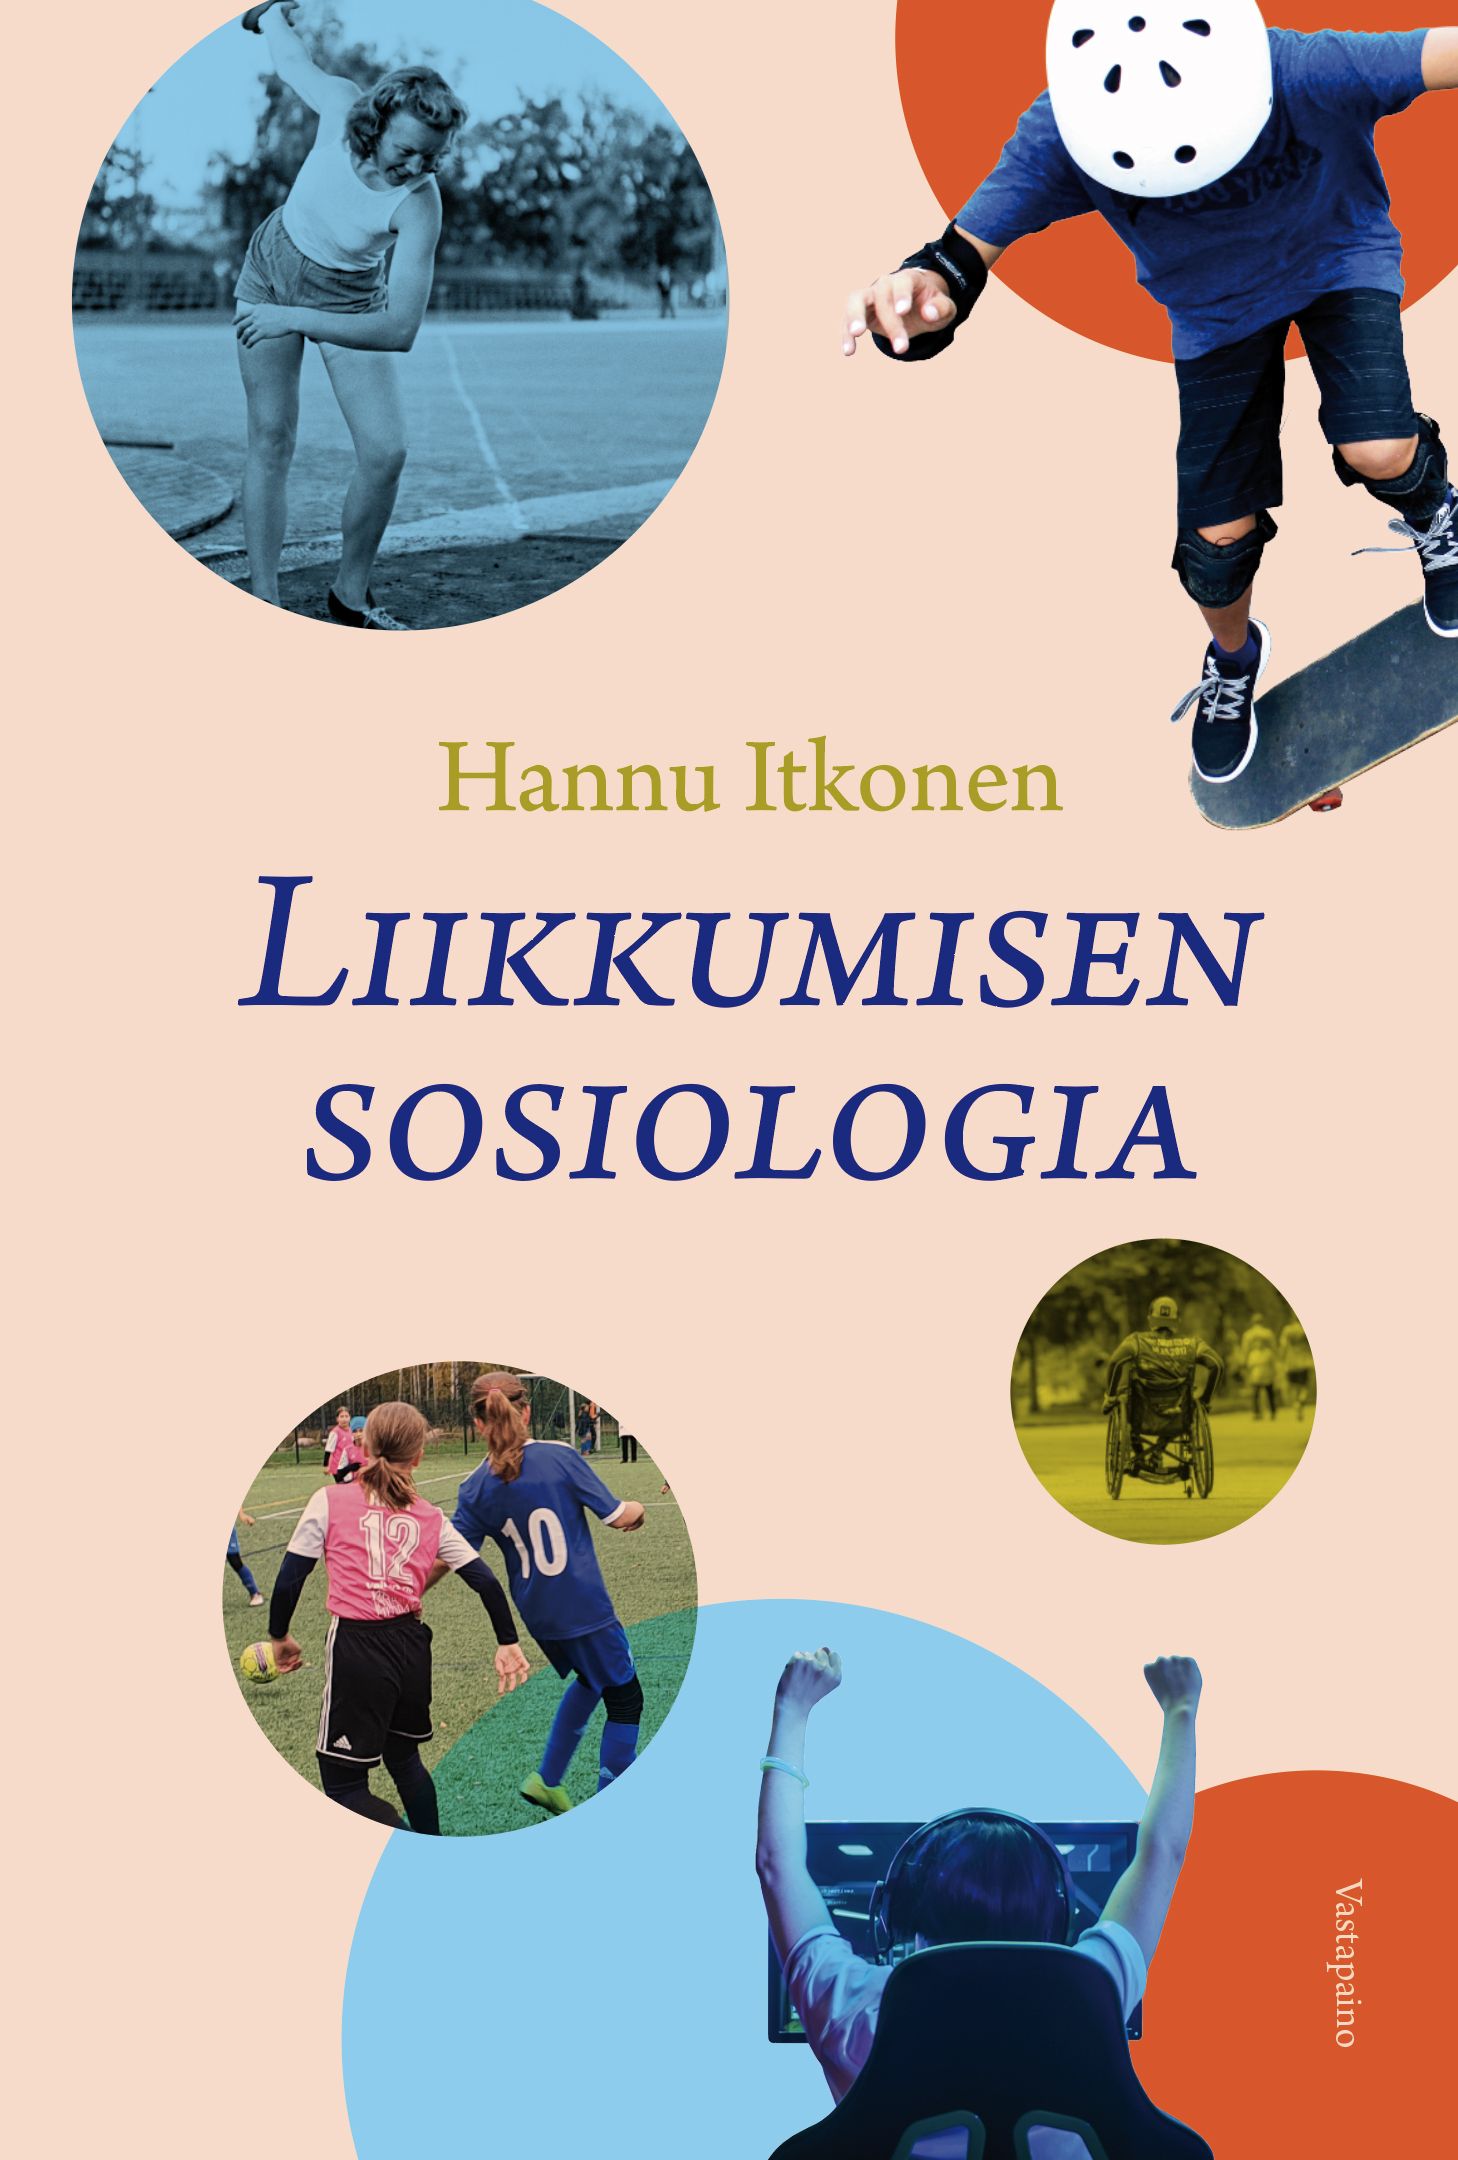 Hannu Itkonen : Liikkumisen sosiologia